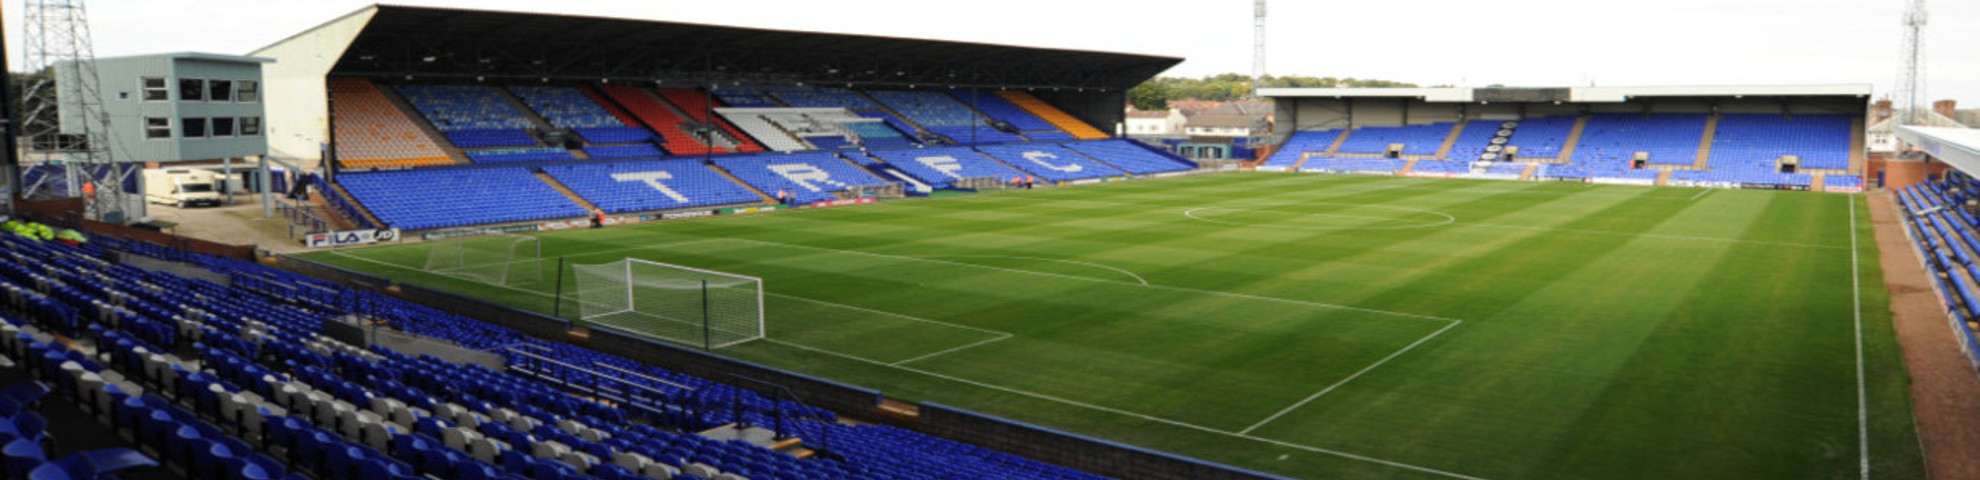 An empty football stadium with blue seats.